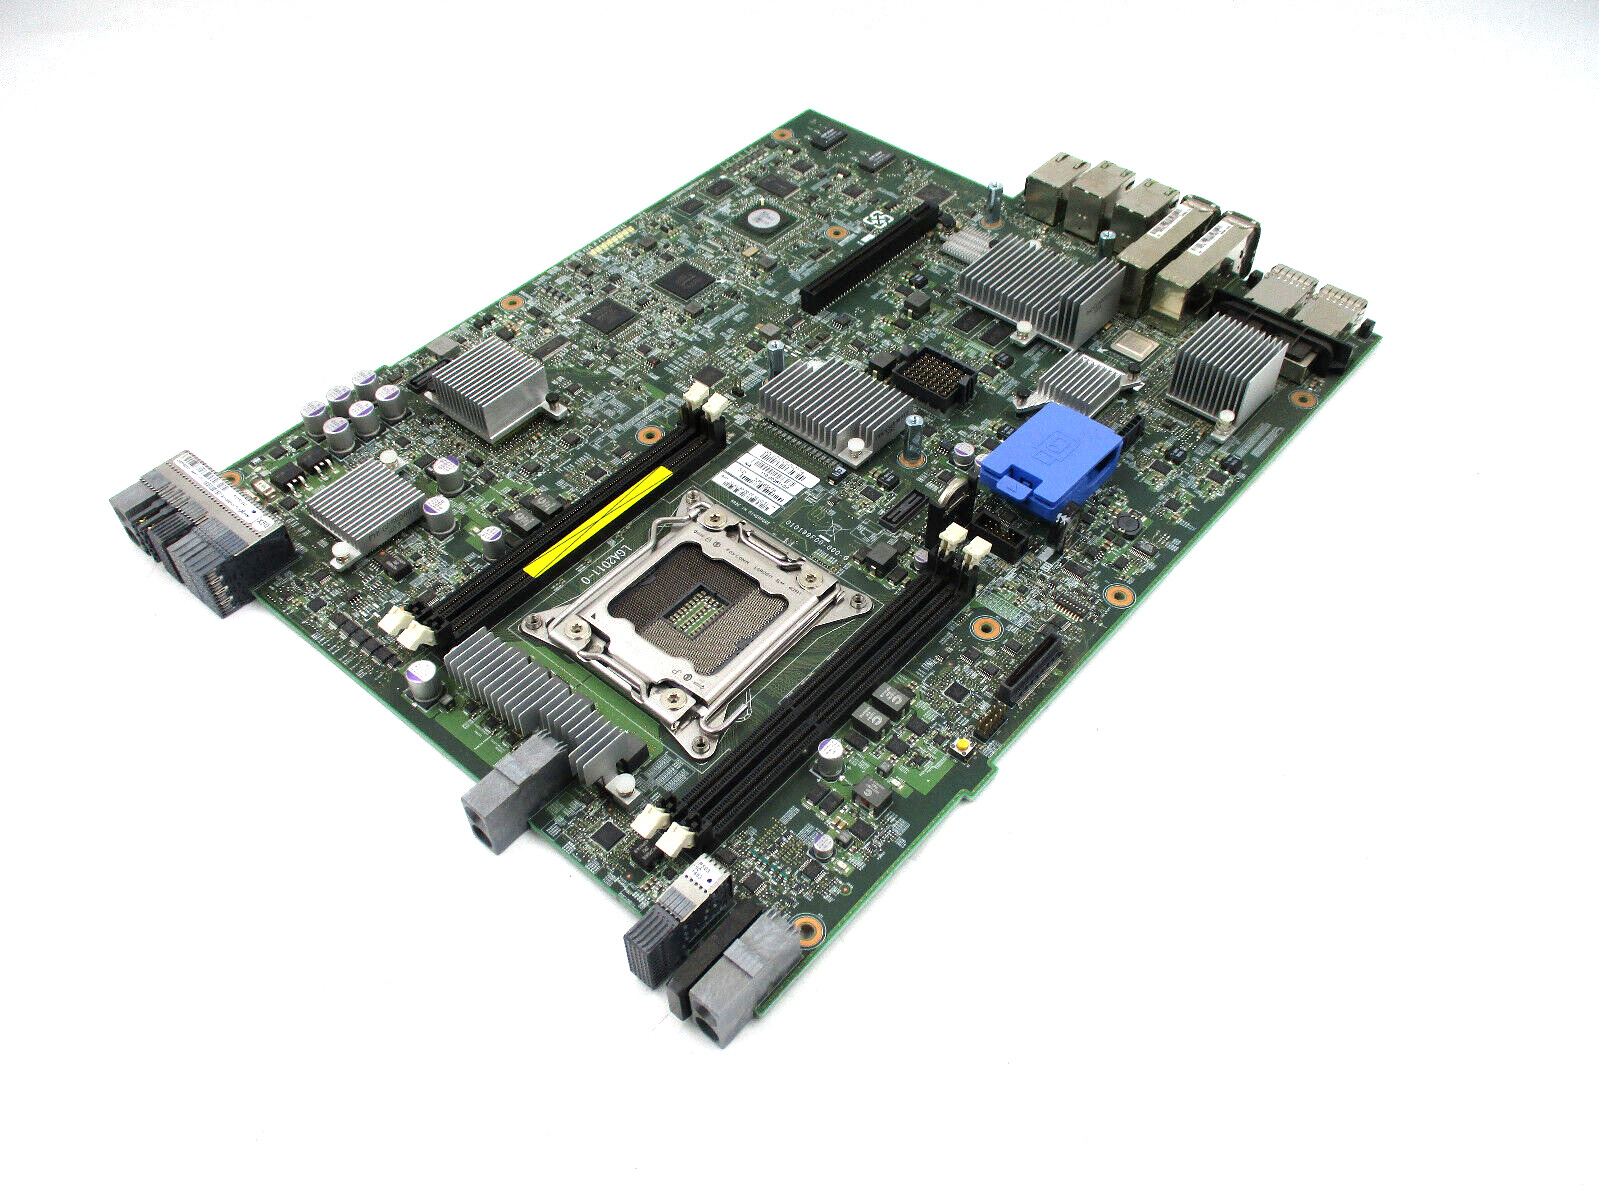 Netapp FAS80X0 Filer System DDR3 LGA 2011 Motherboard P/N: 110-00261+D0 Tested